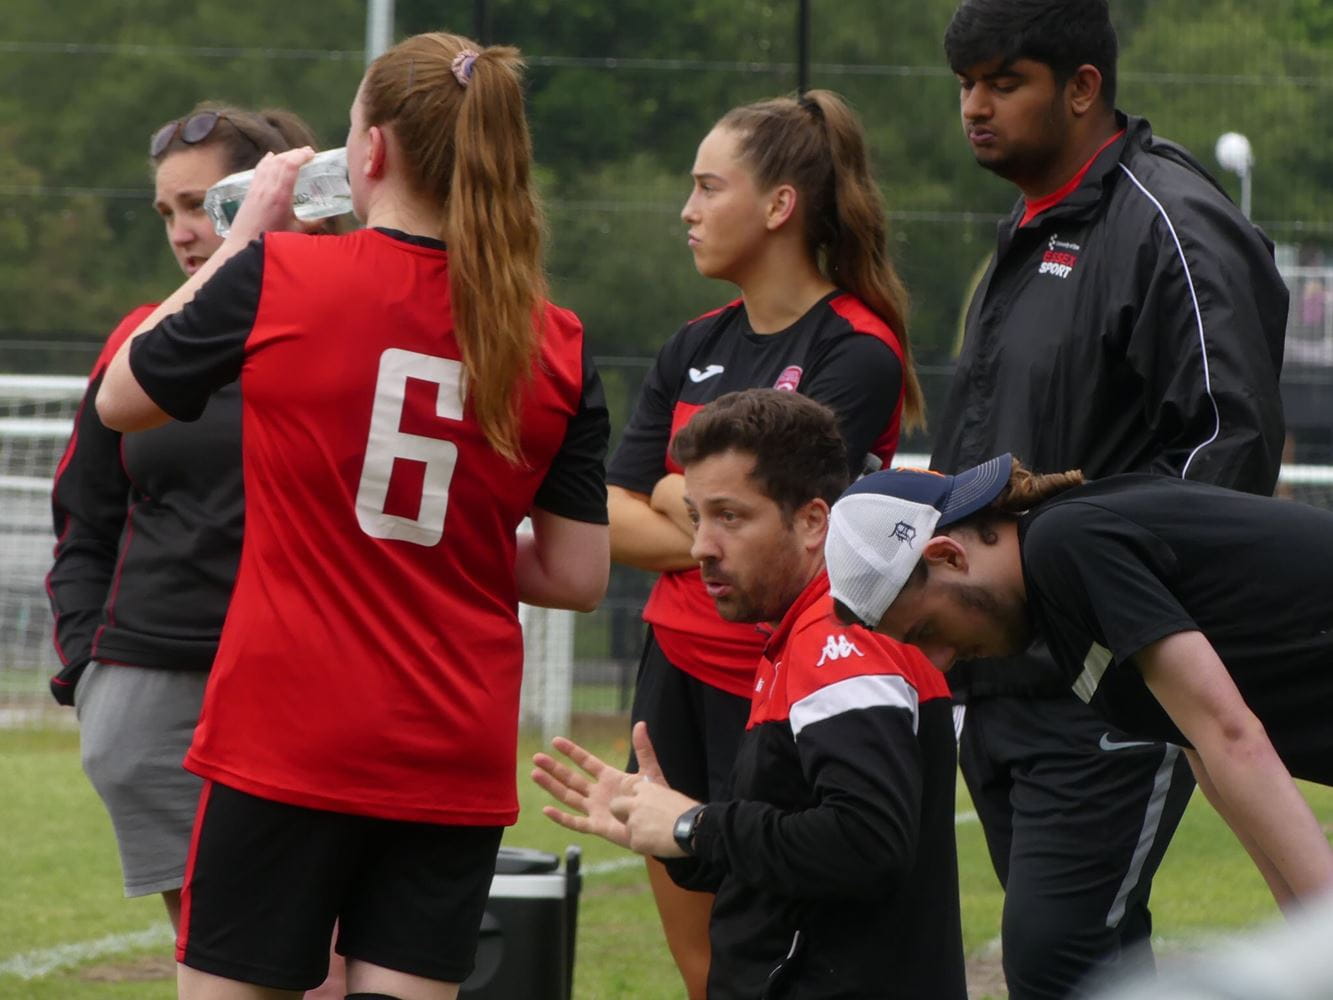 Women's football team receiving instructions from their coach.